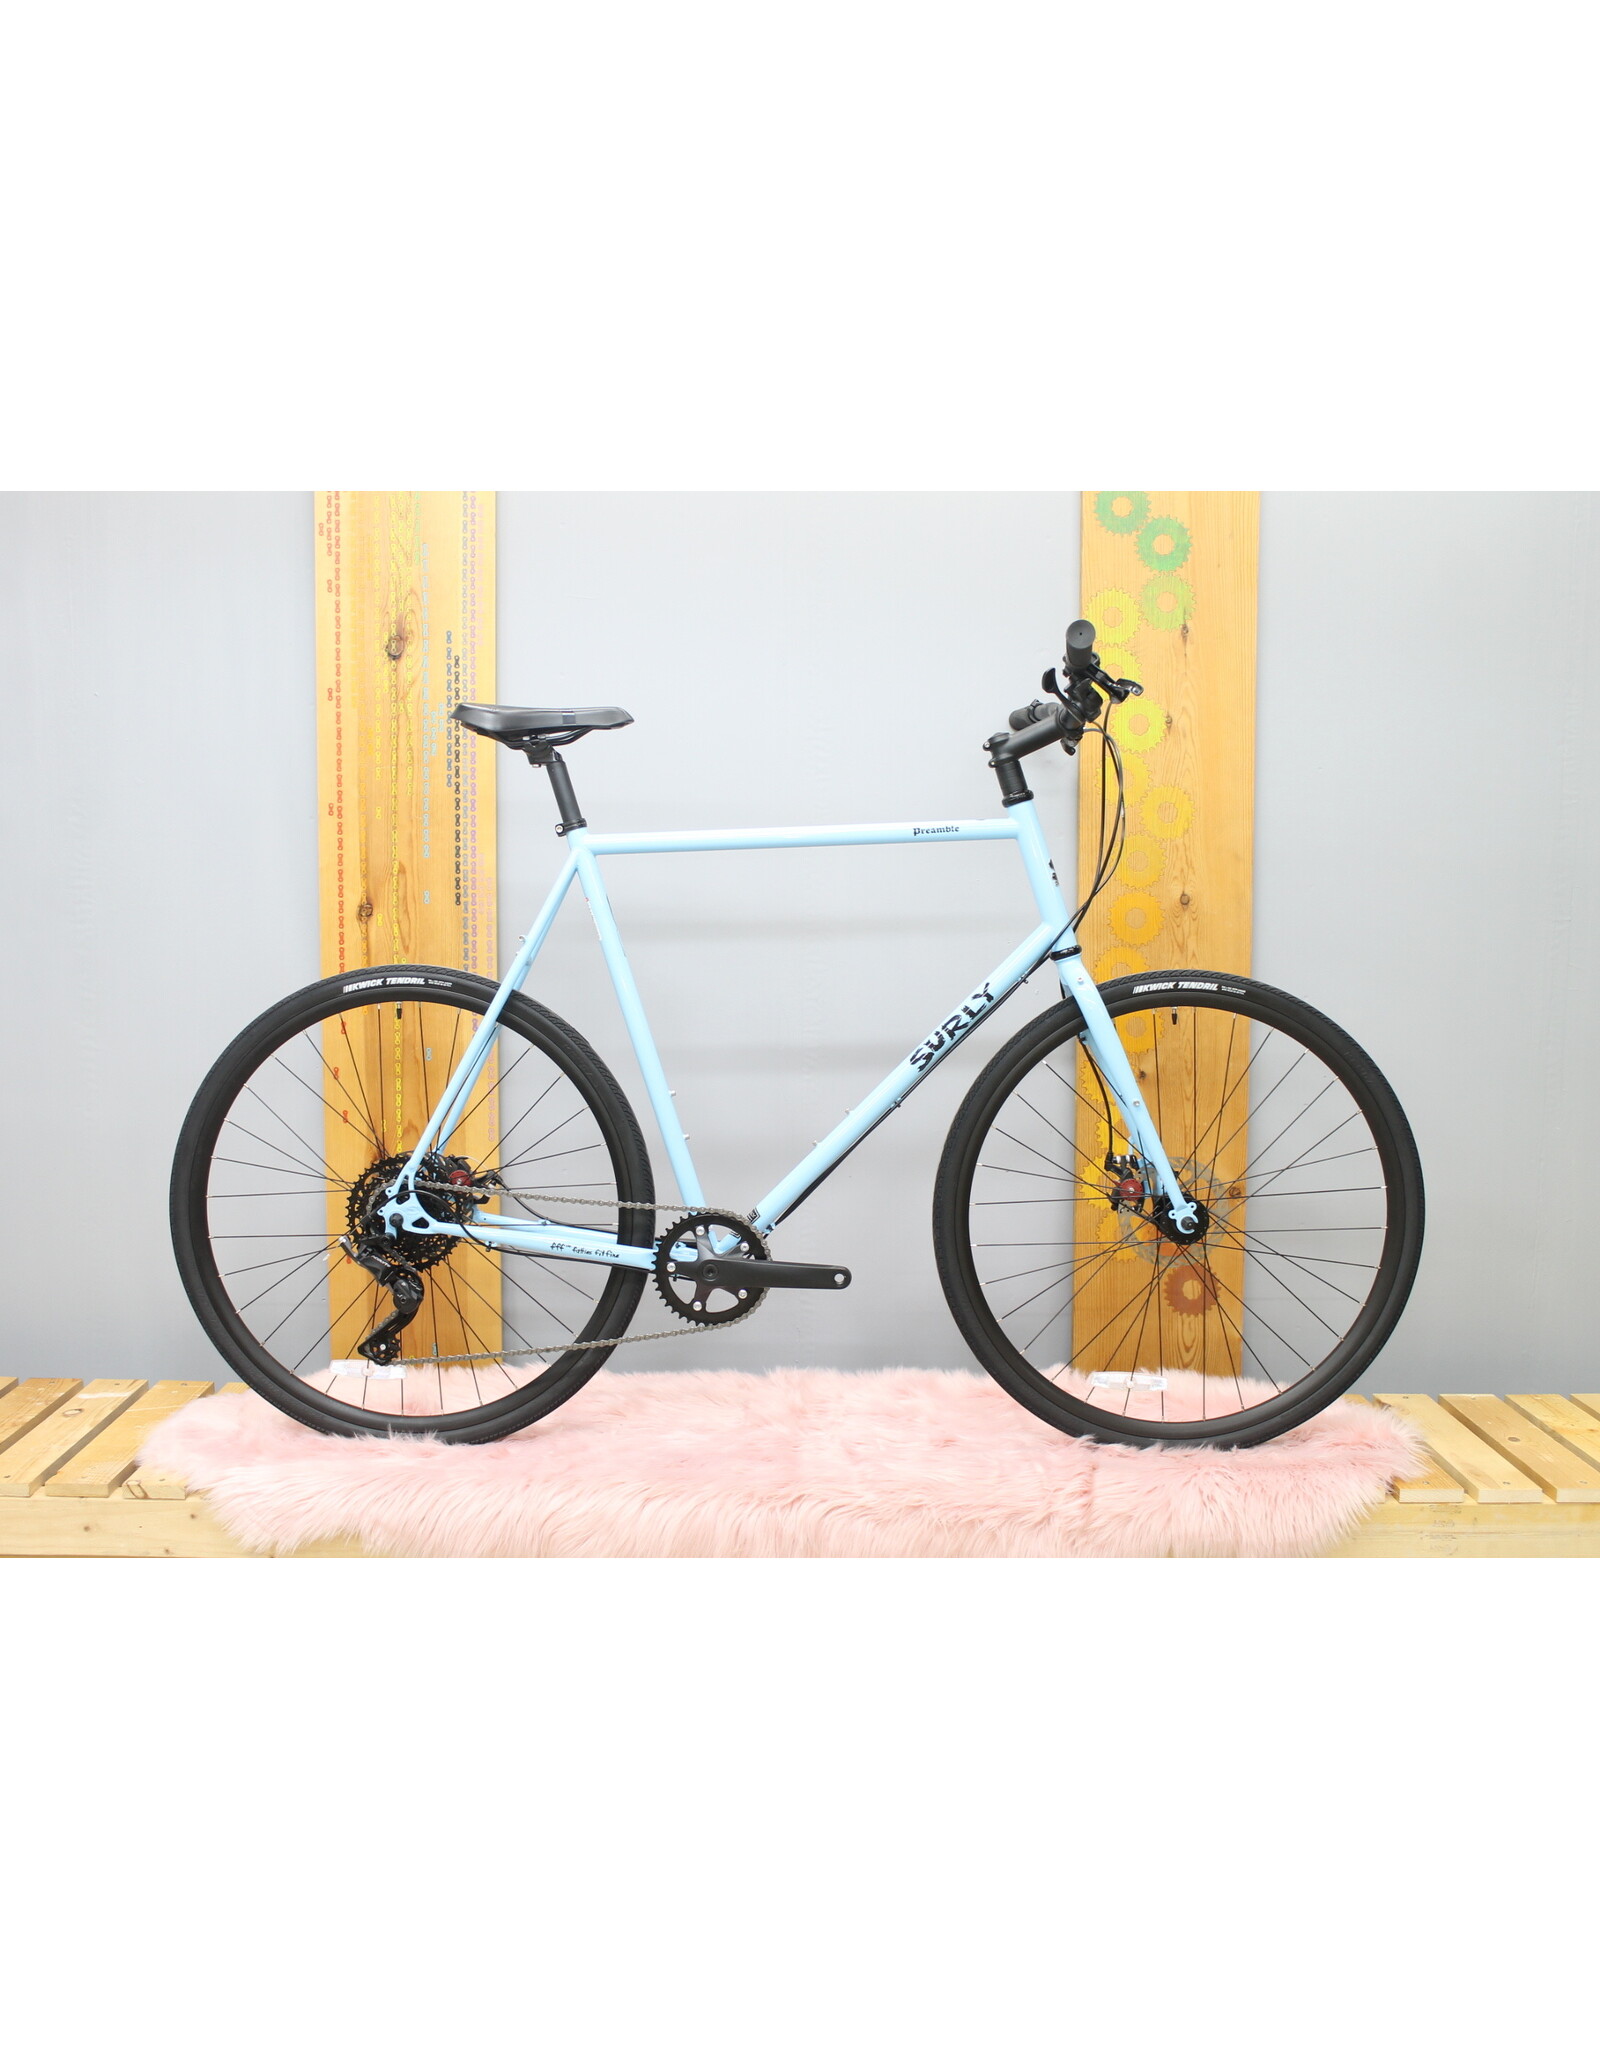 Surly Surly Preamble Flat Bar Bike - 700c, Skyrim Blue X-Large